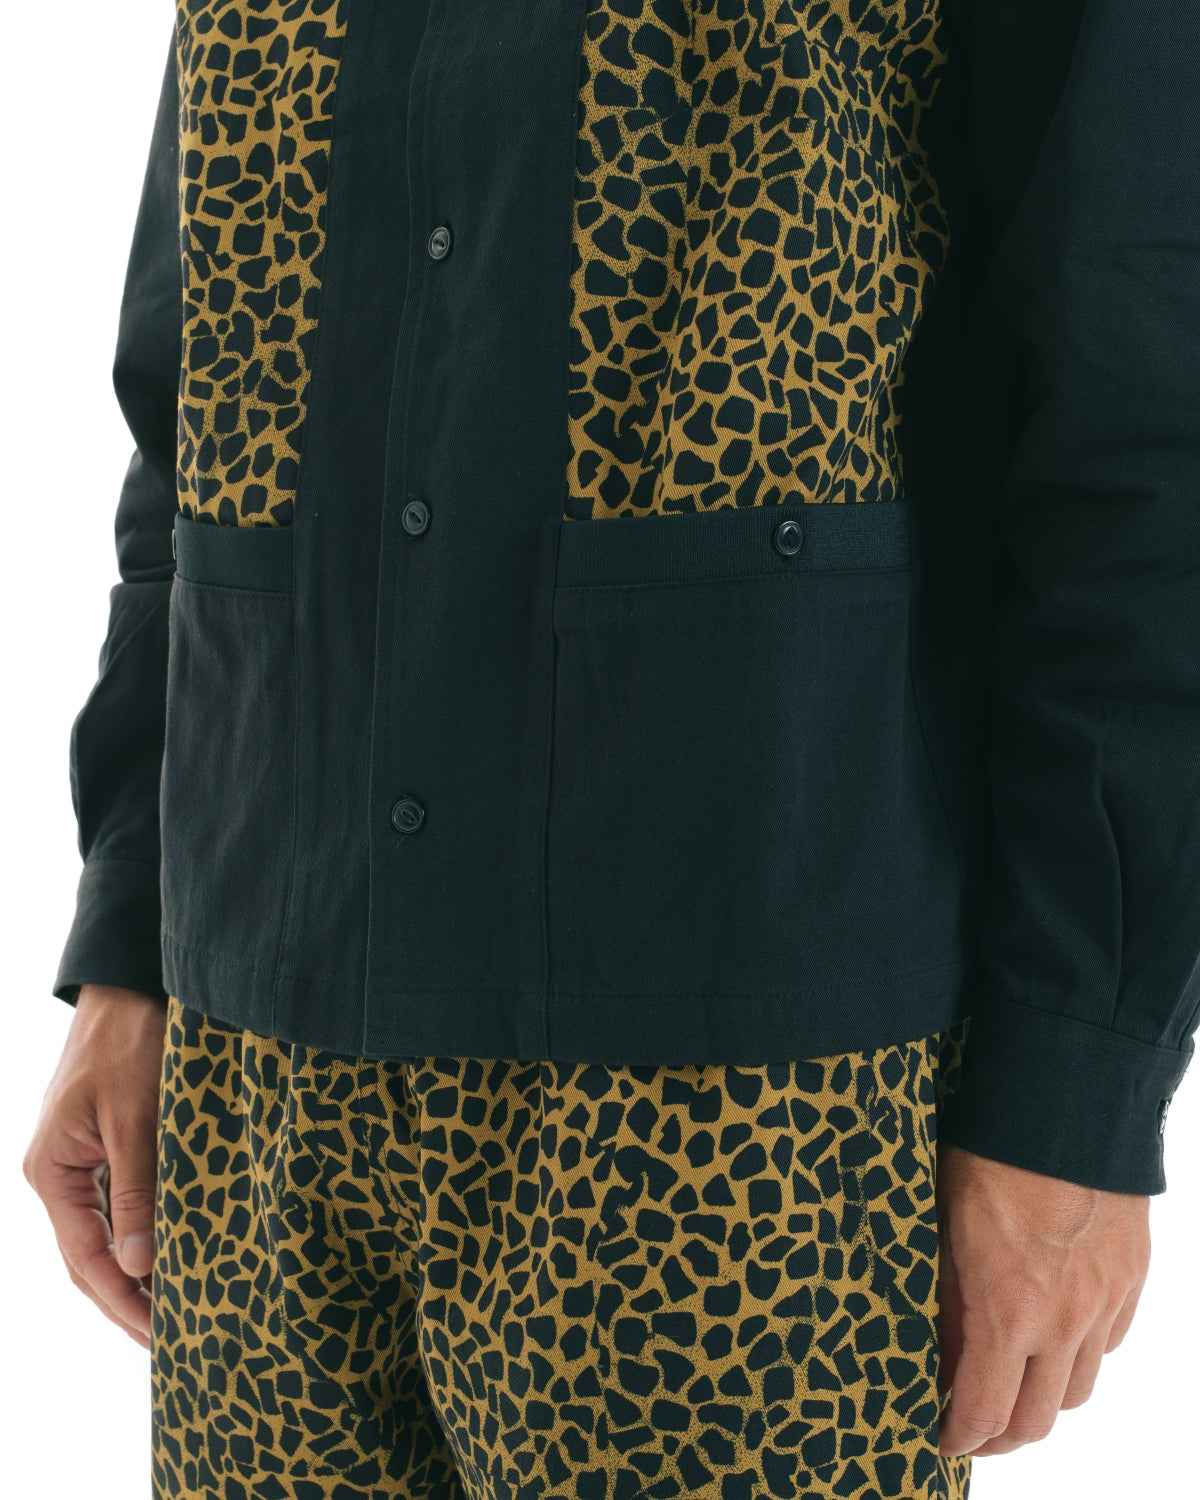 Cheetah Cabana Shirt - Leopard / Black